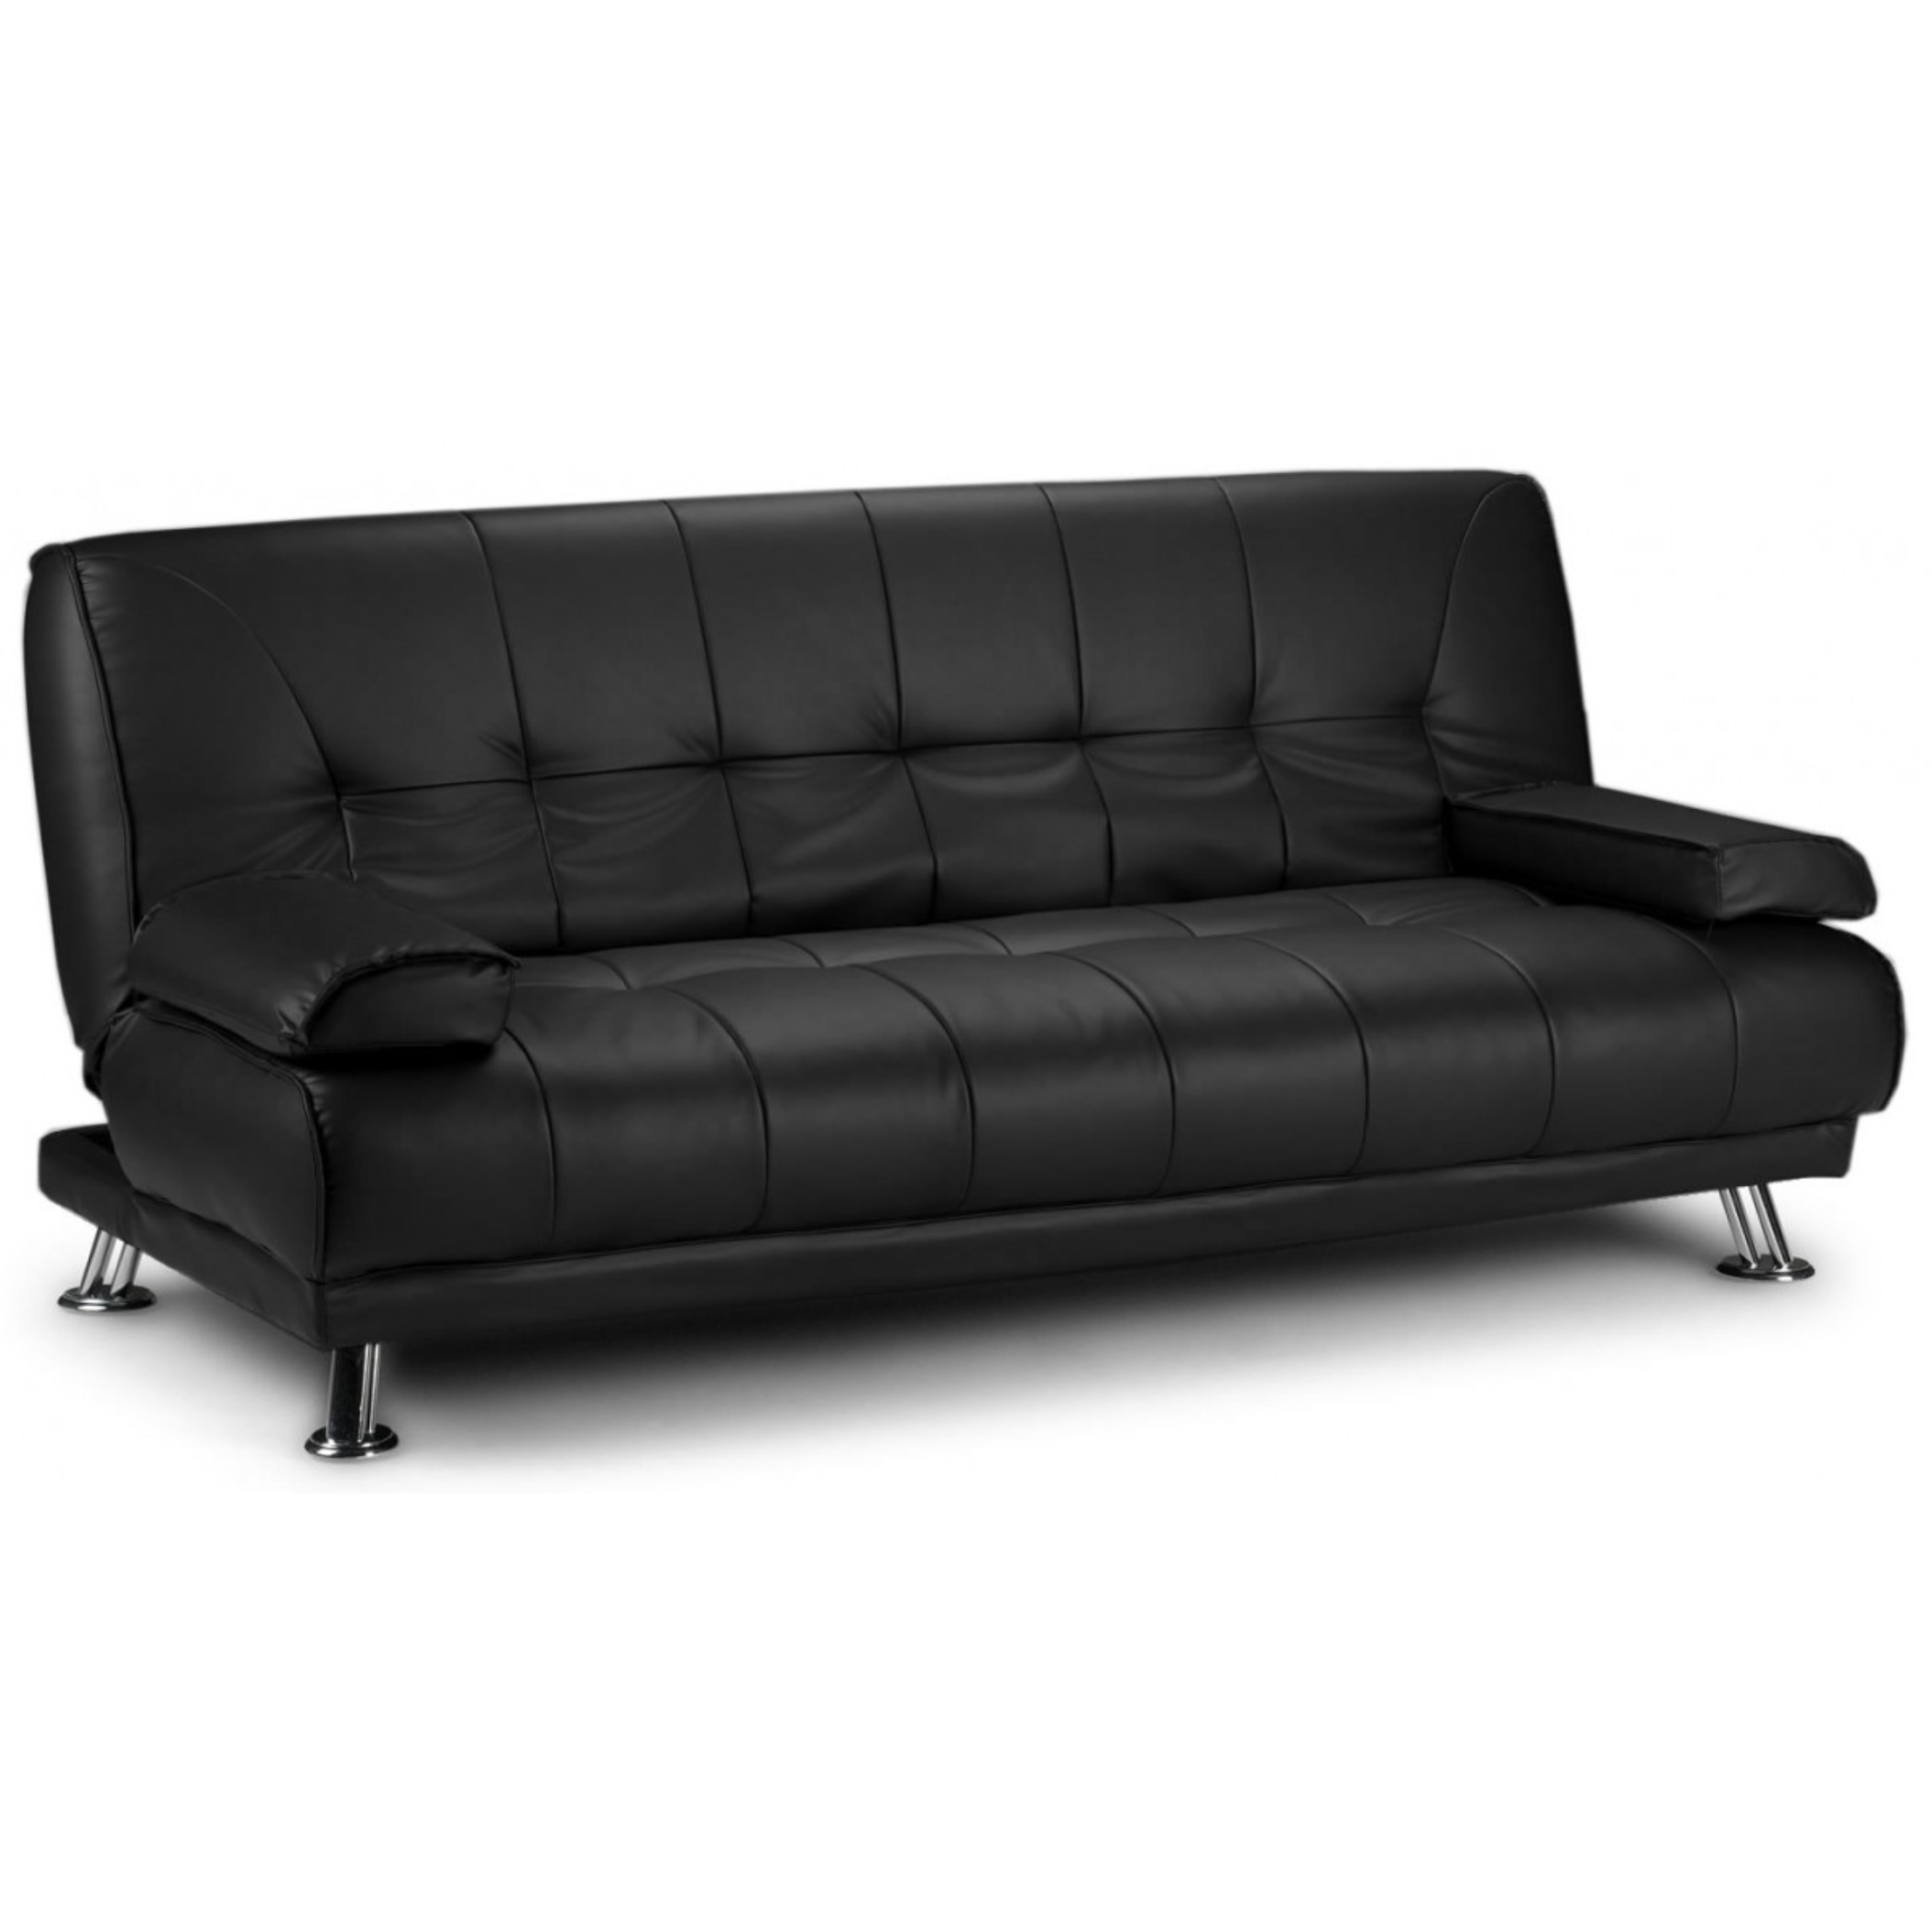 Nicole Leather Sofa Bed Black Leather